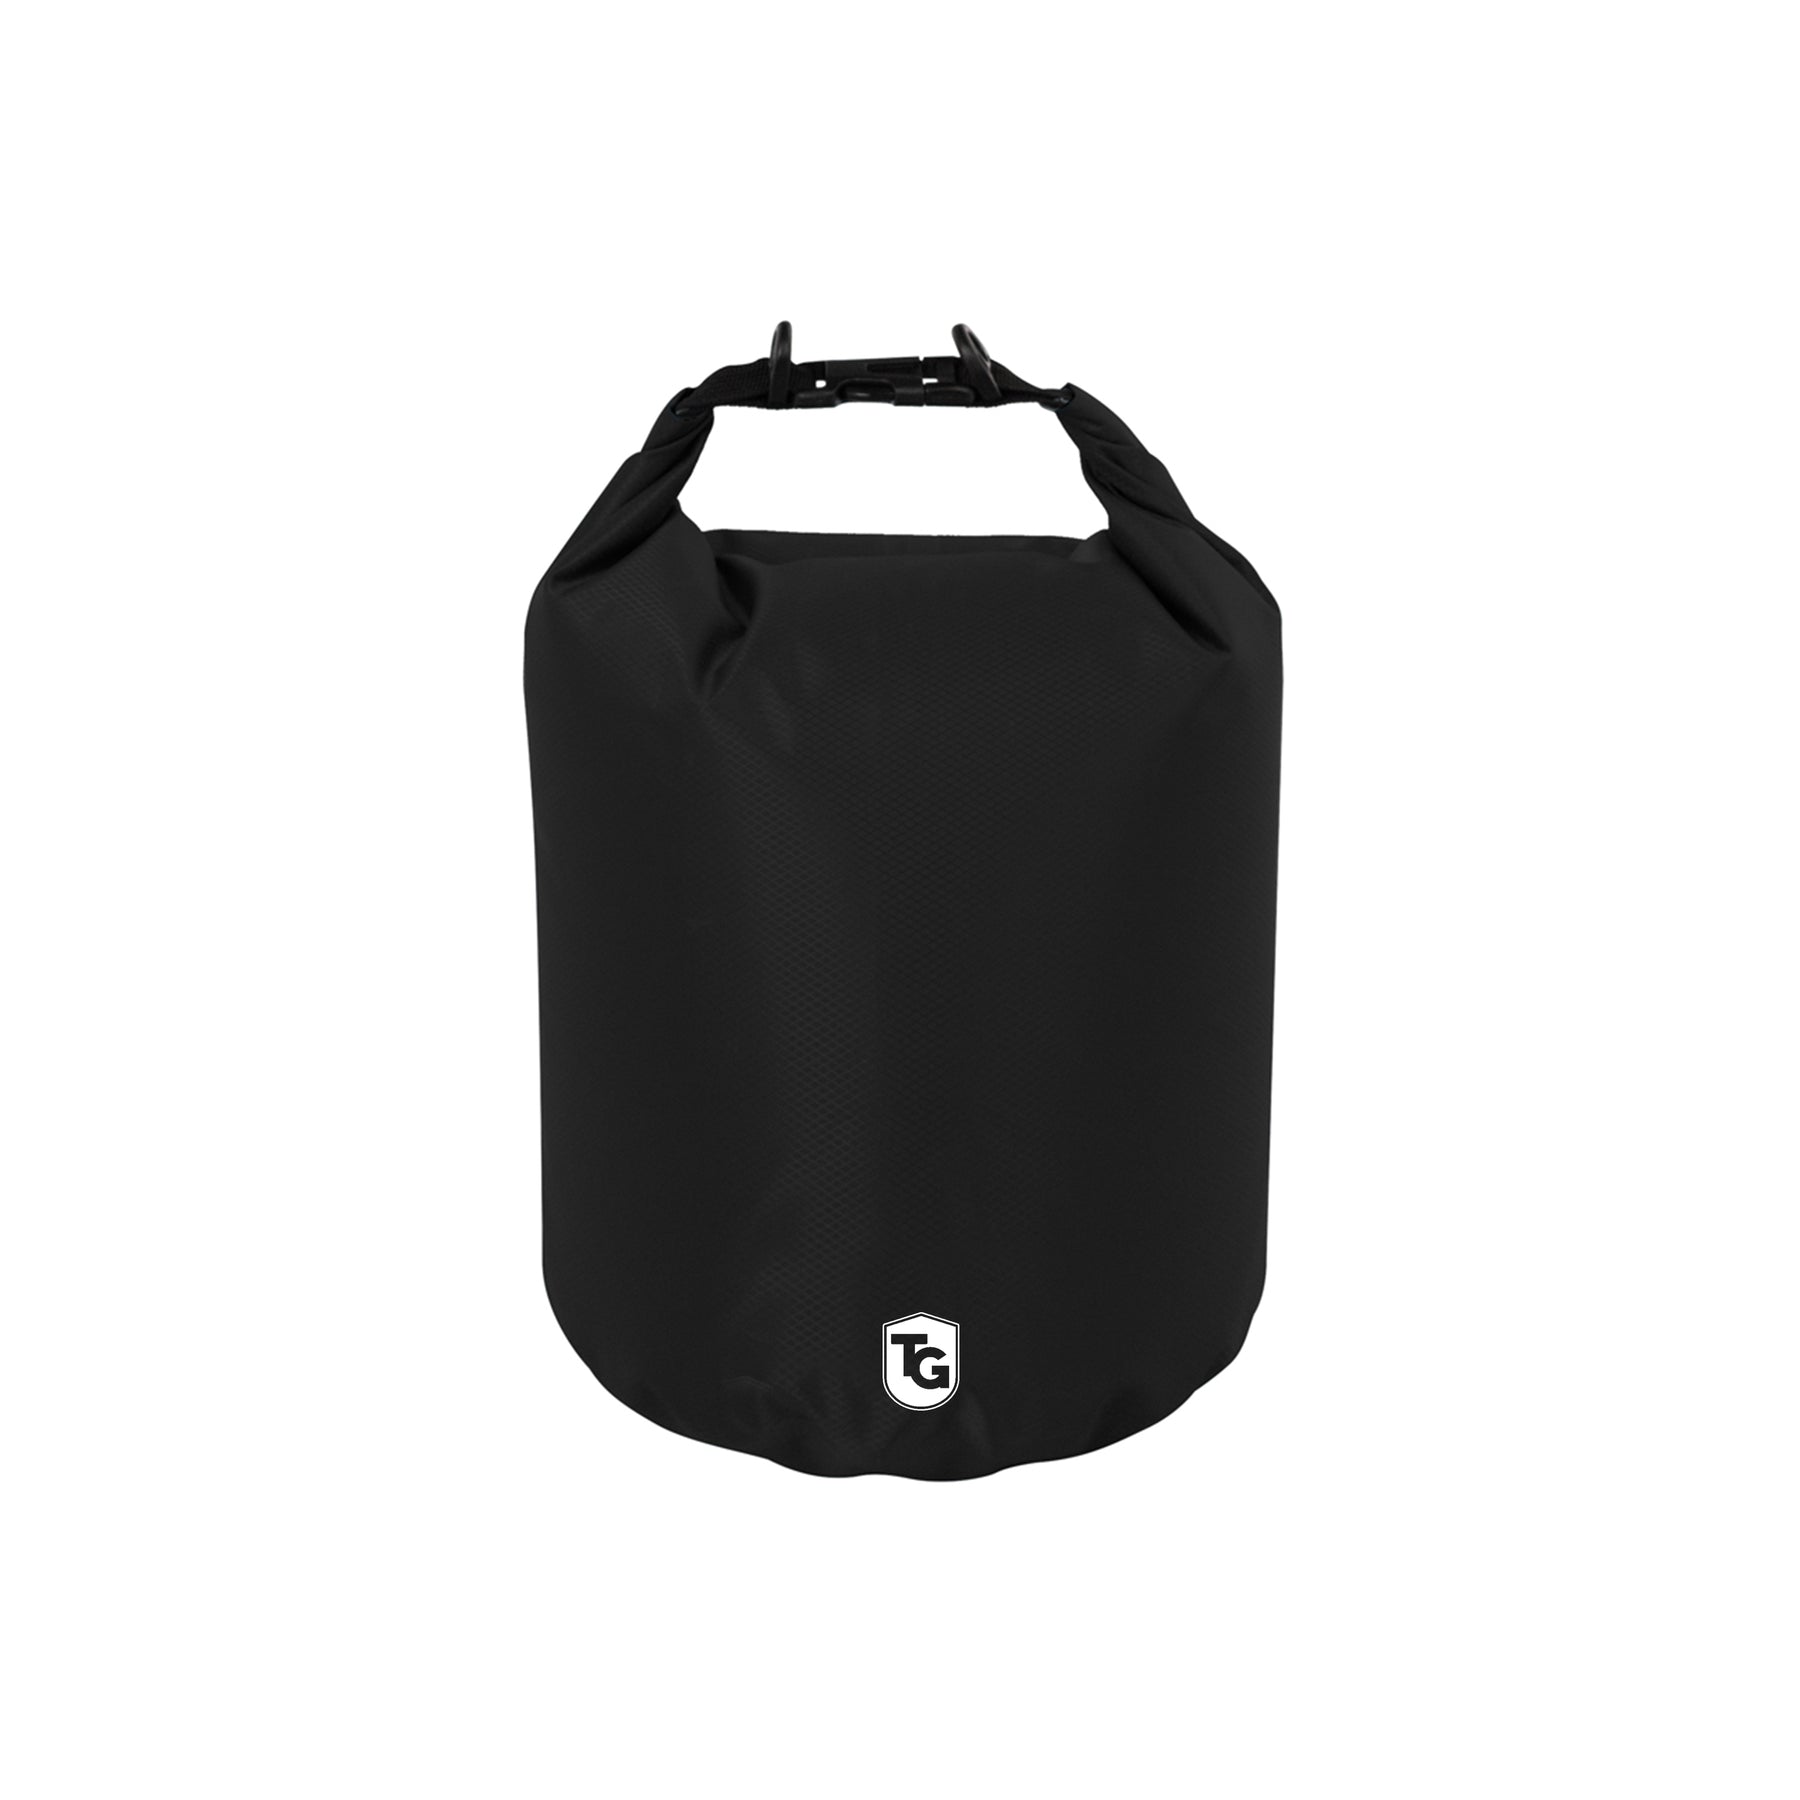 TrailGear 5 liter Heavy-Duty Dry Bag in the black variation.